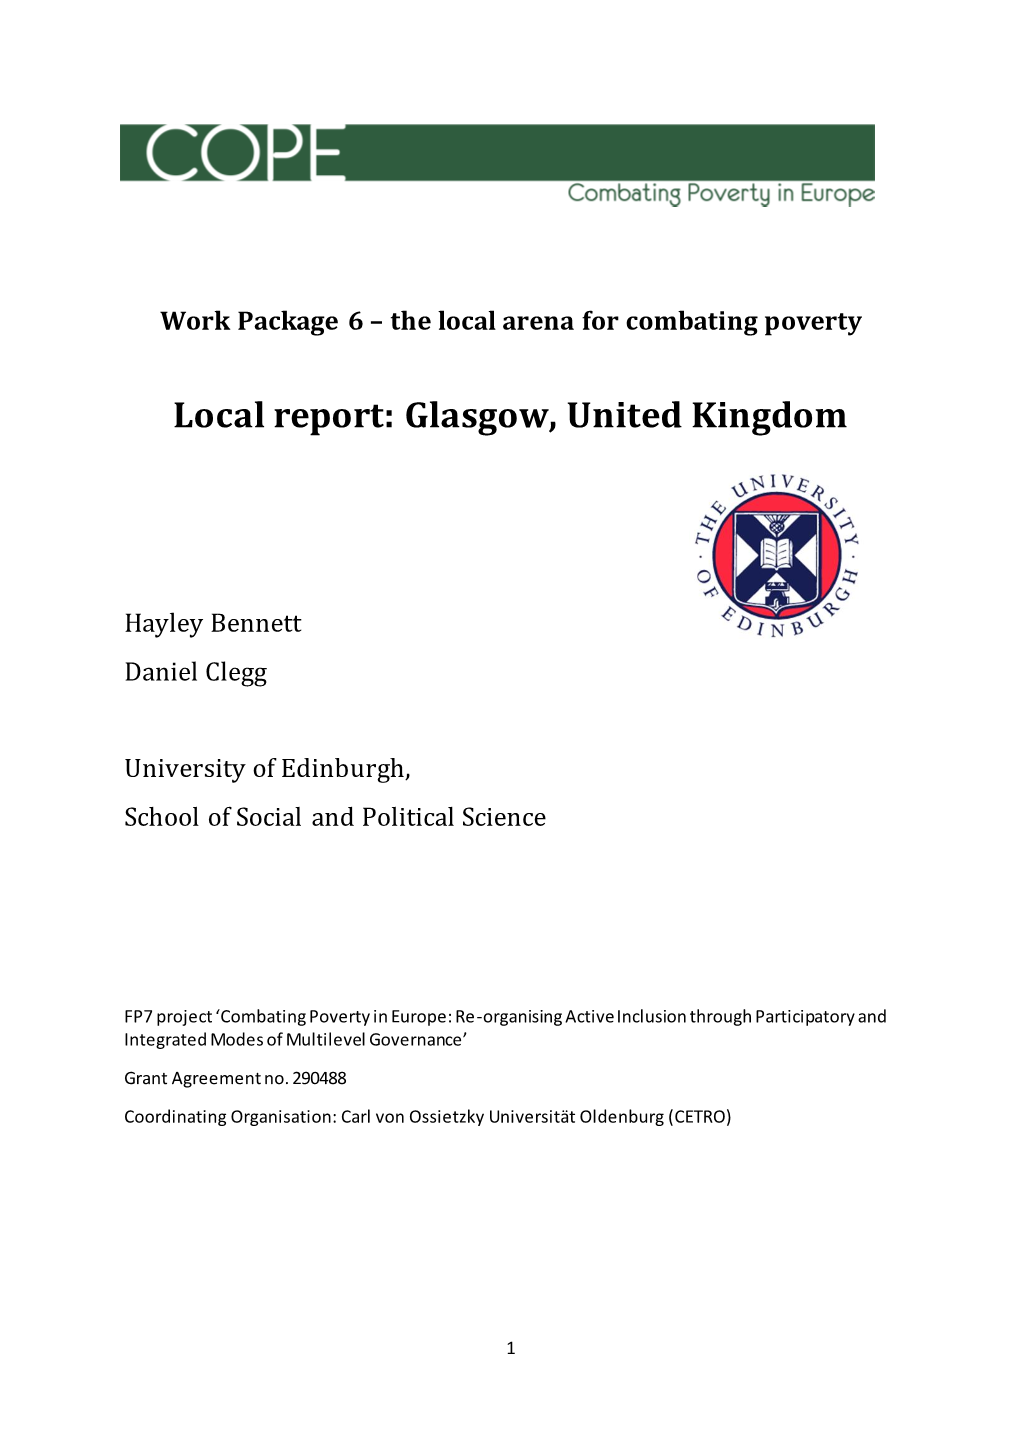 Local Report: Glasgow, United Kingdom